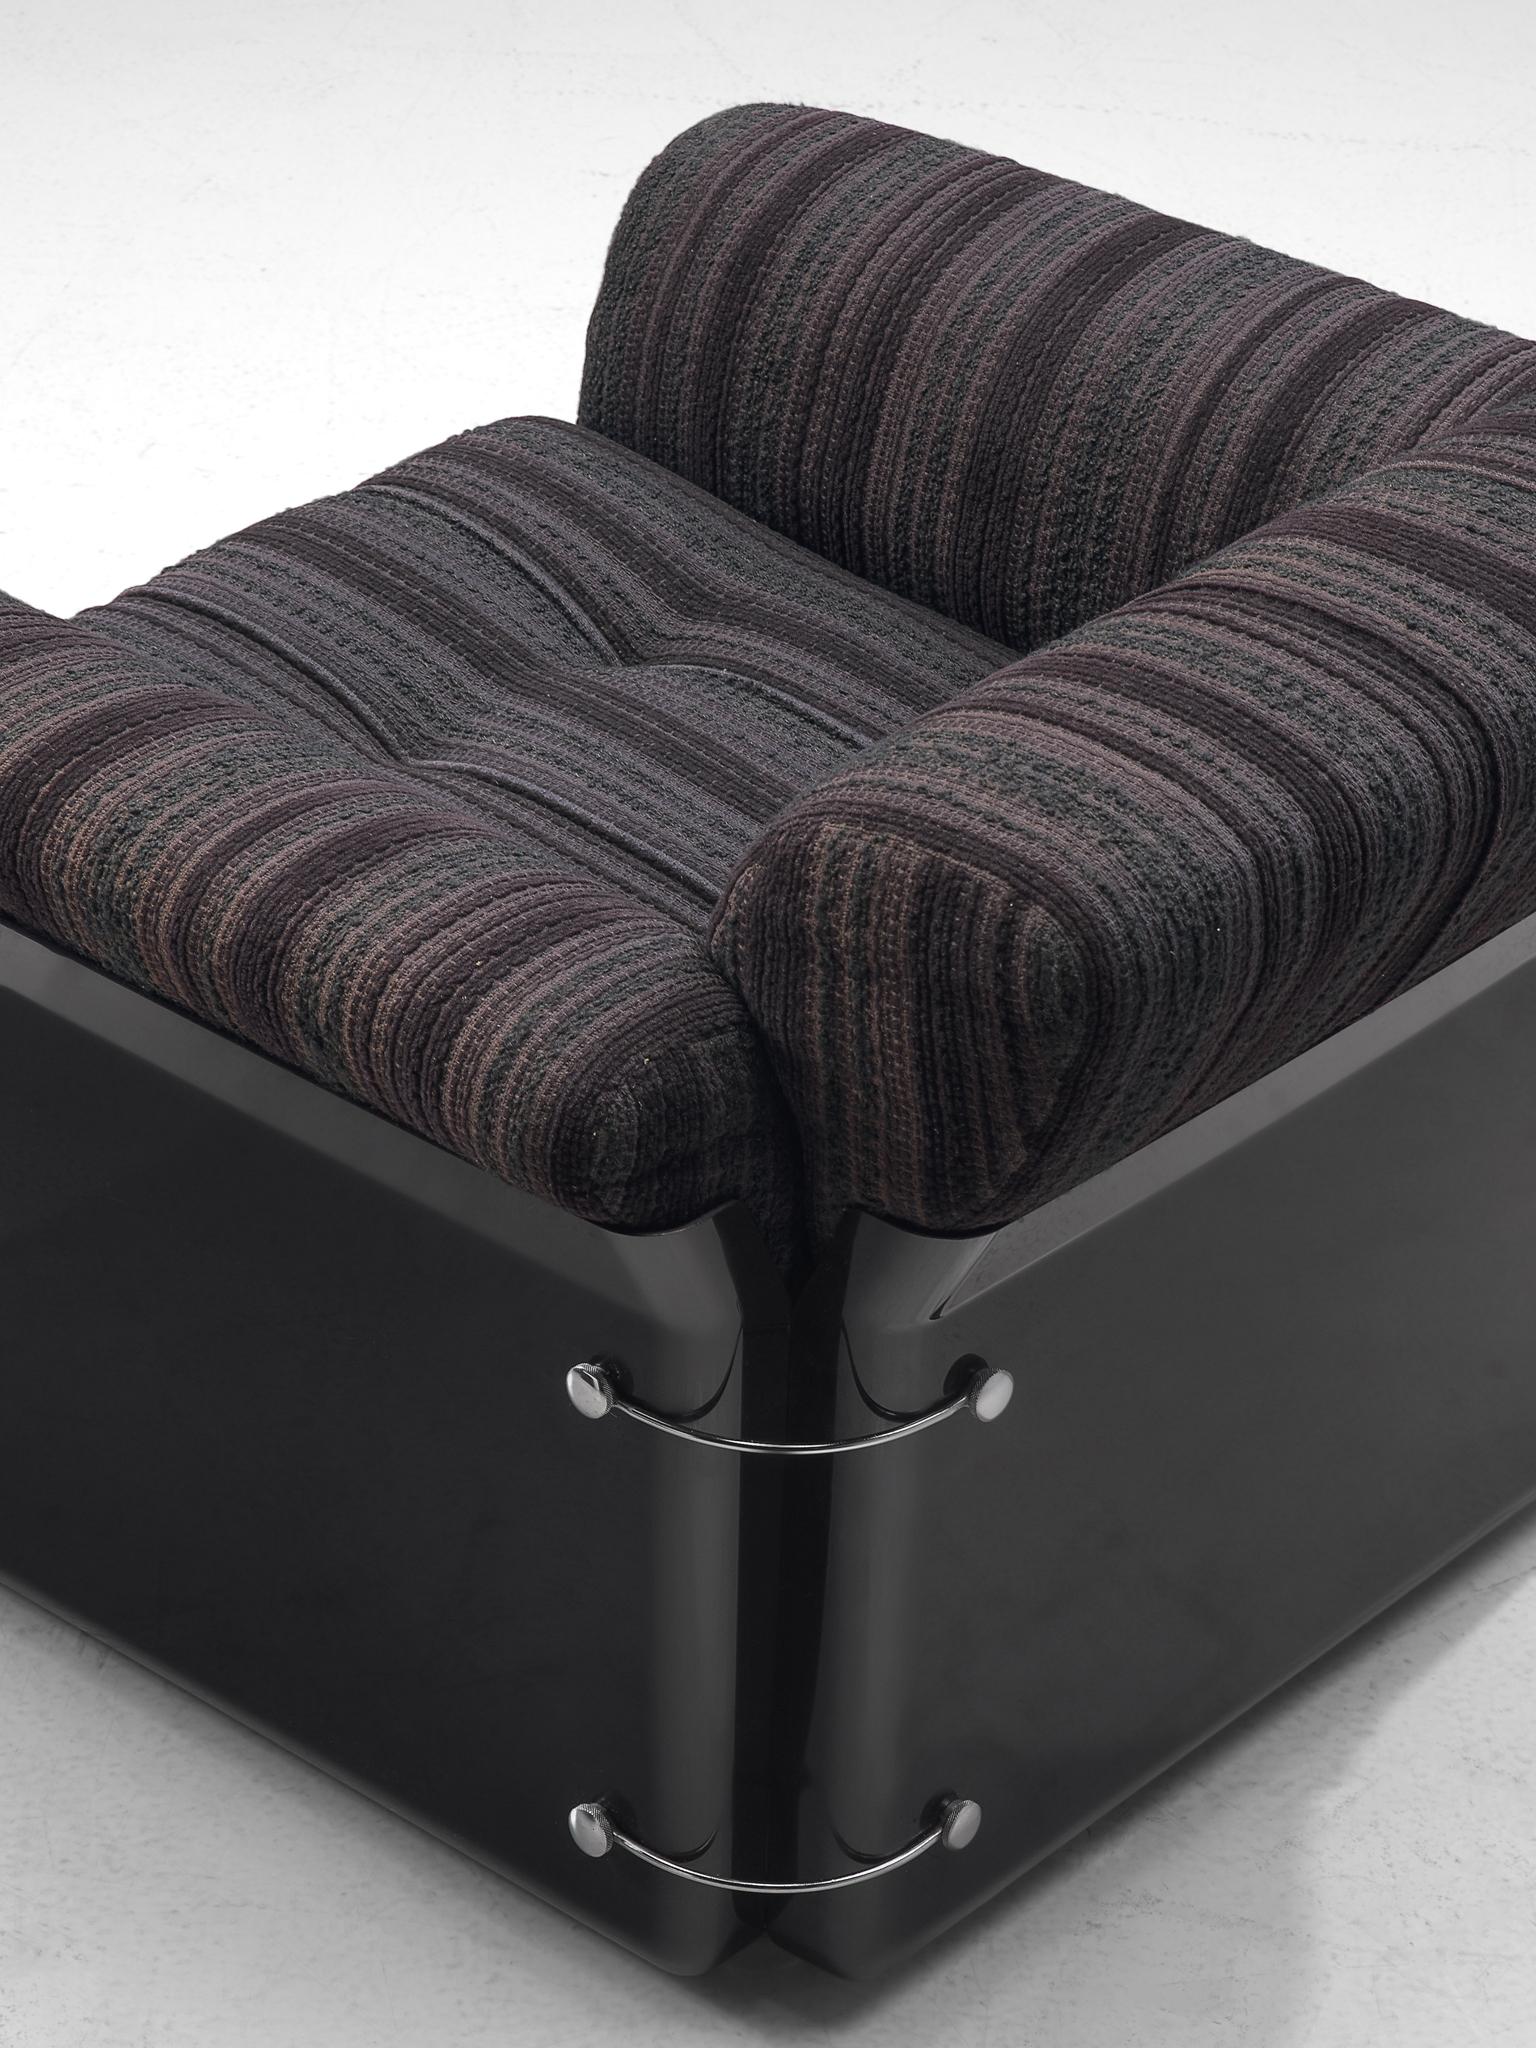 Fabric Vittorio Introini for Saporiti Pair of 'Larissa' Lounge Chairs